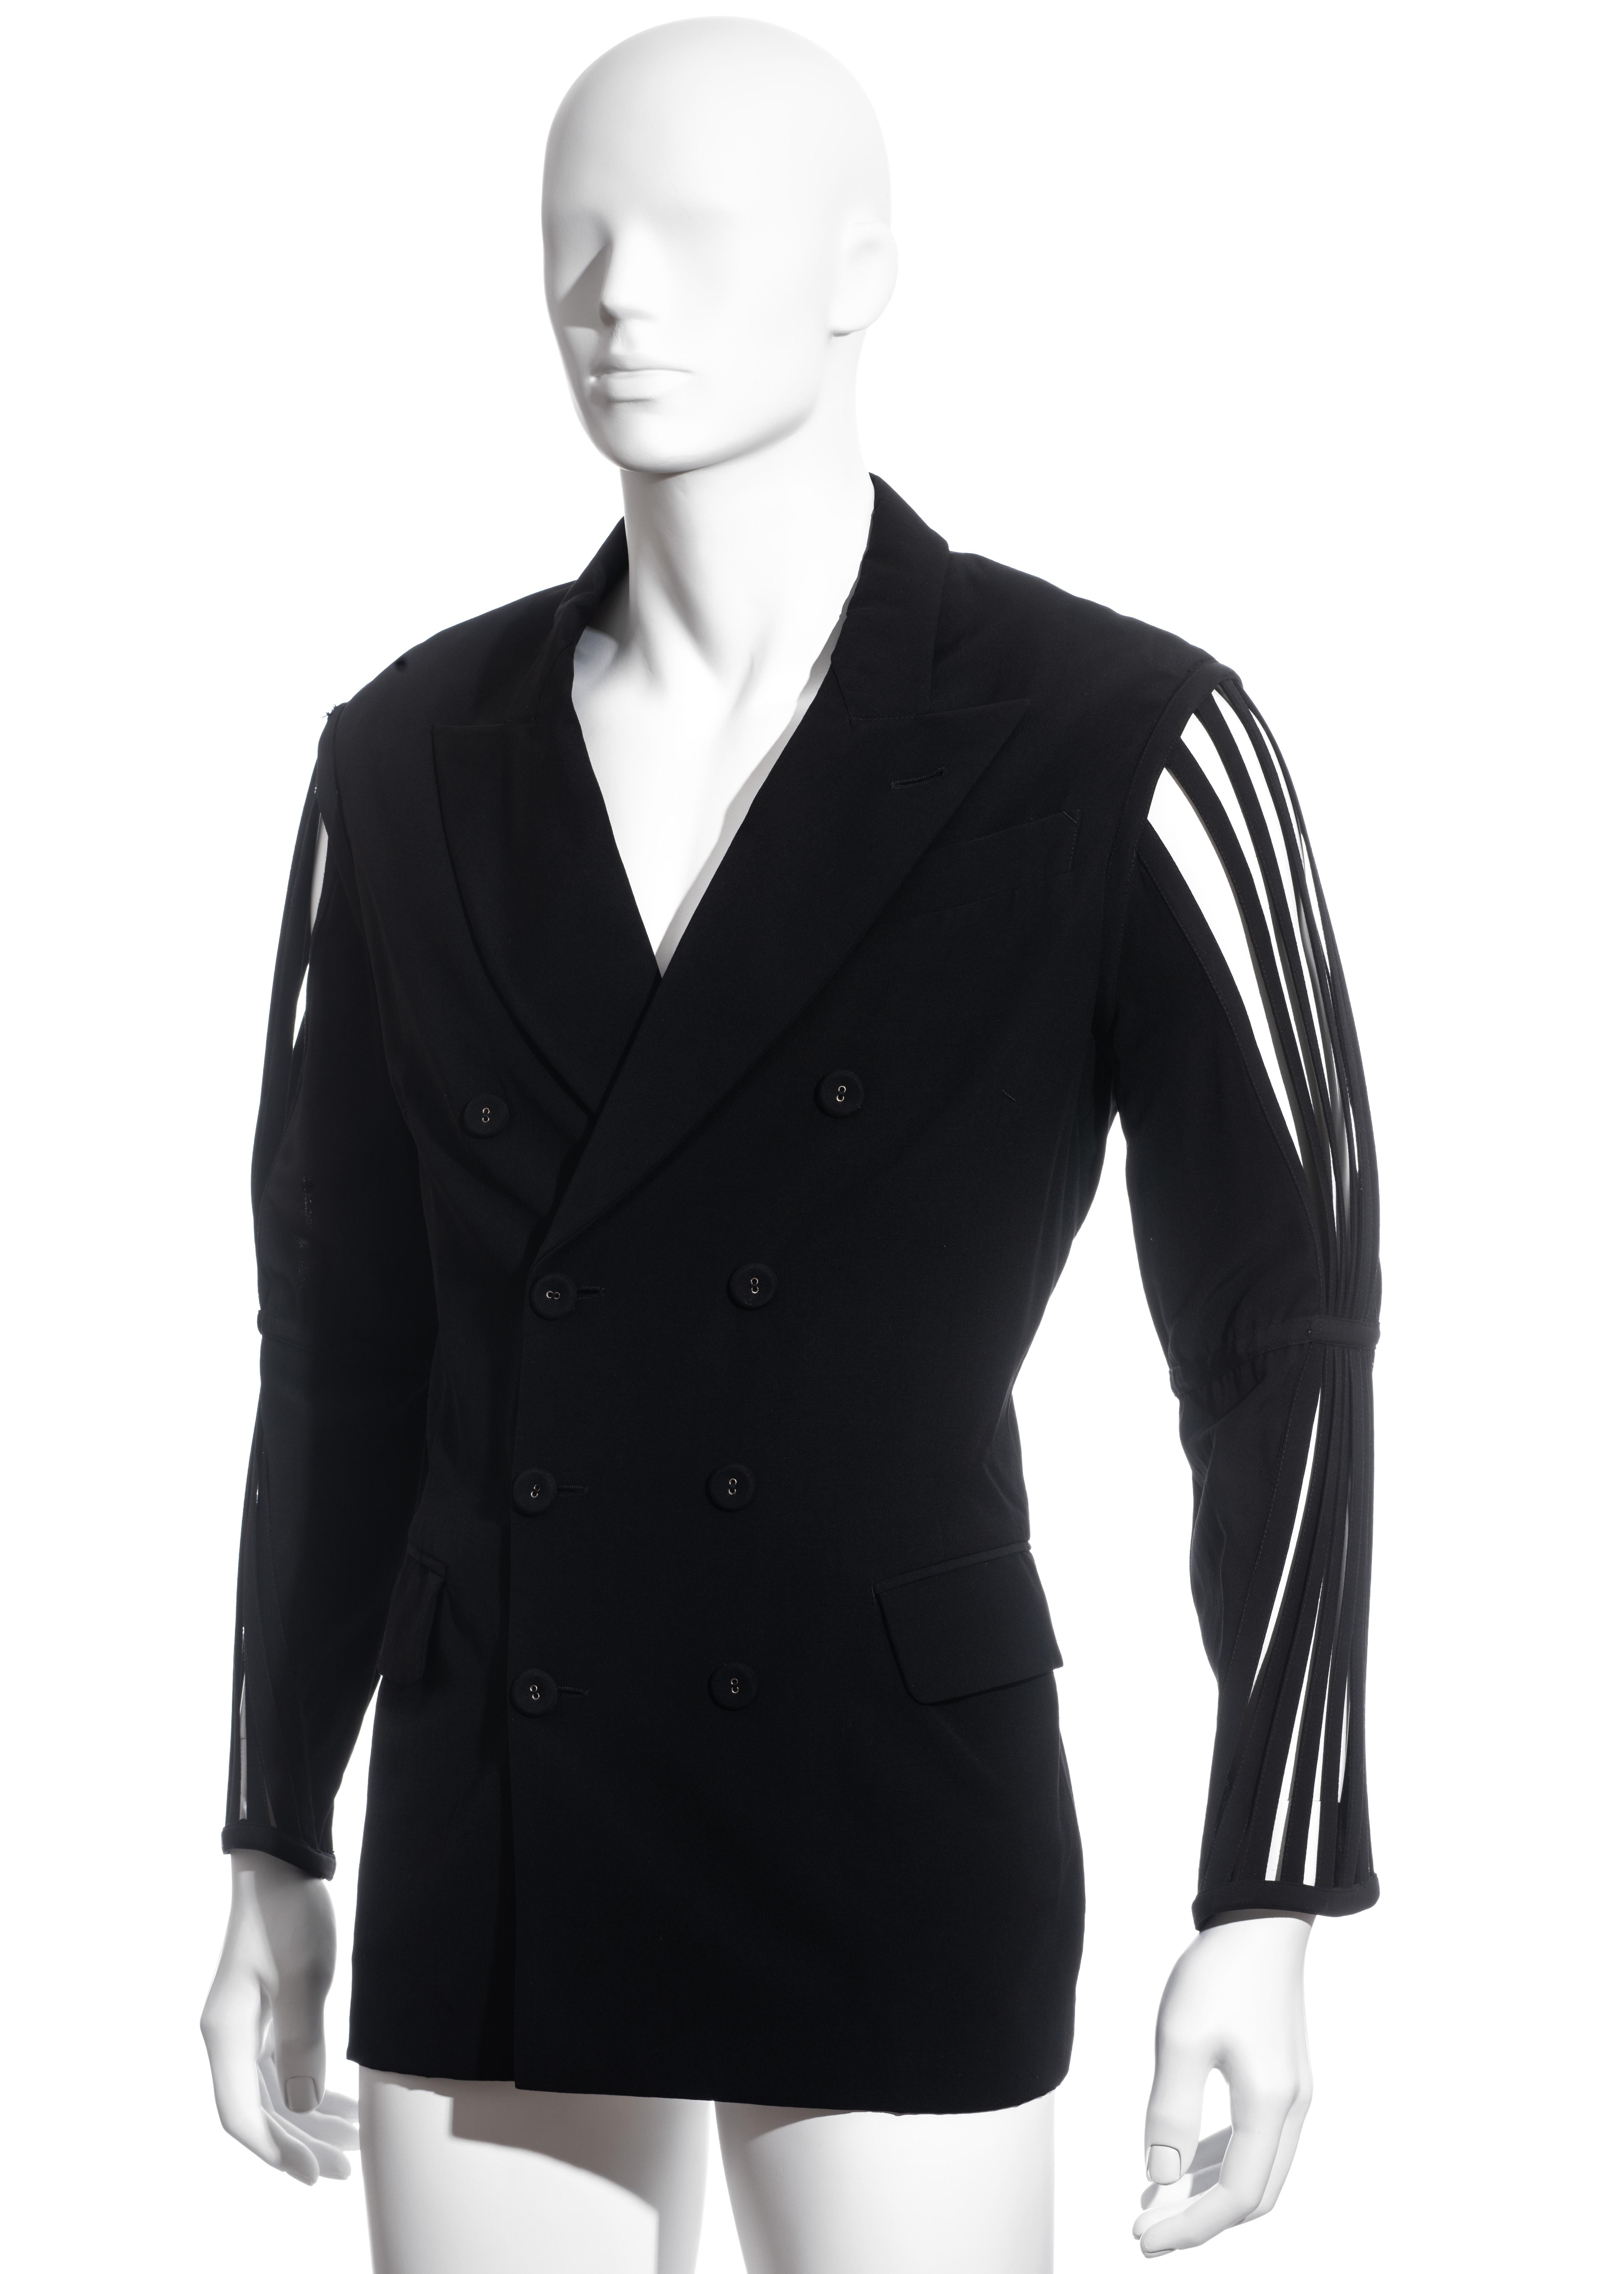 ▪ Men's Jean Paul Gaultier black double-breasted blazer jacket
▪ 100% Wool
▪ Caged sleeves 
▪ Peak lapels
▪ Provenance: Pete Burns (1959–2016)
▪ Size 48
▪ Spring-Summer 1989
